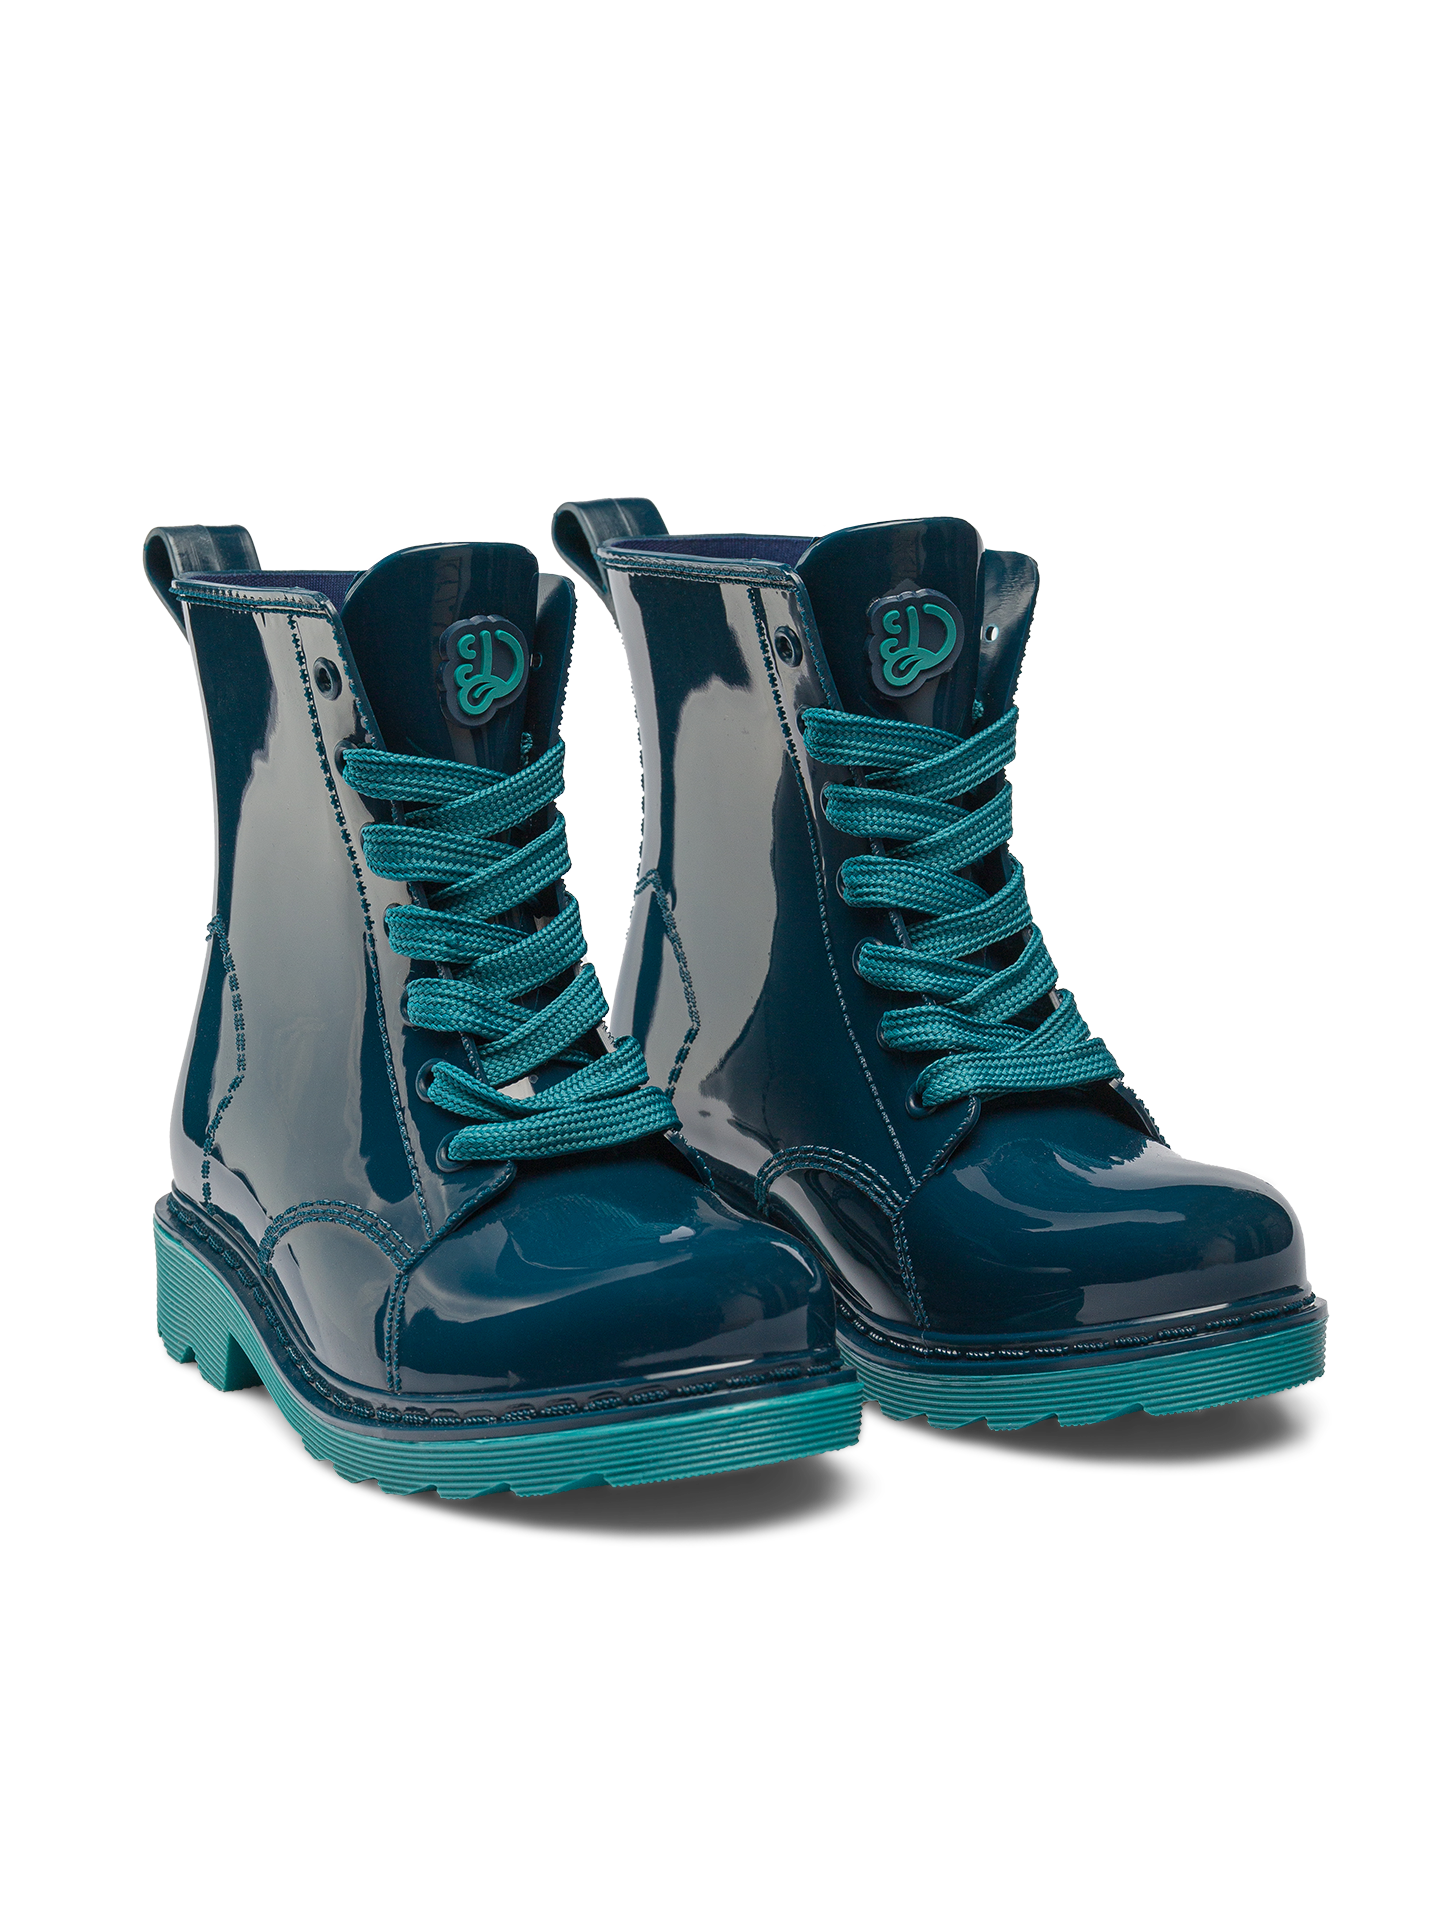 Emerald Blue Kids' Rain Boots